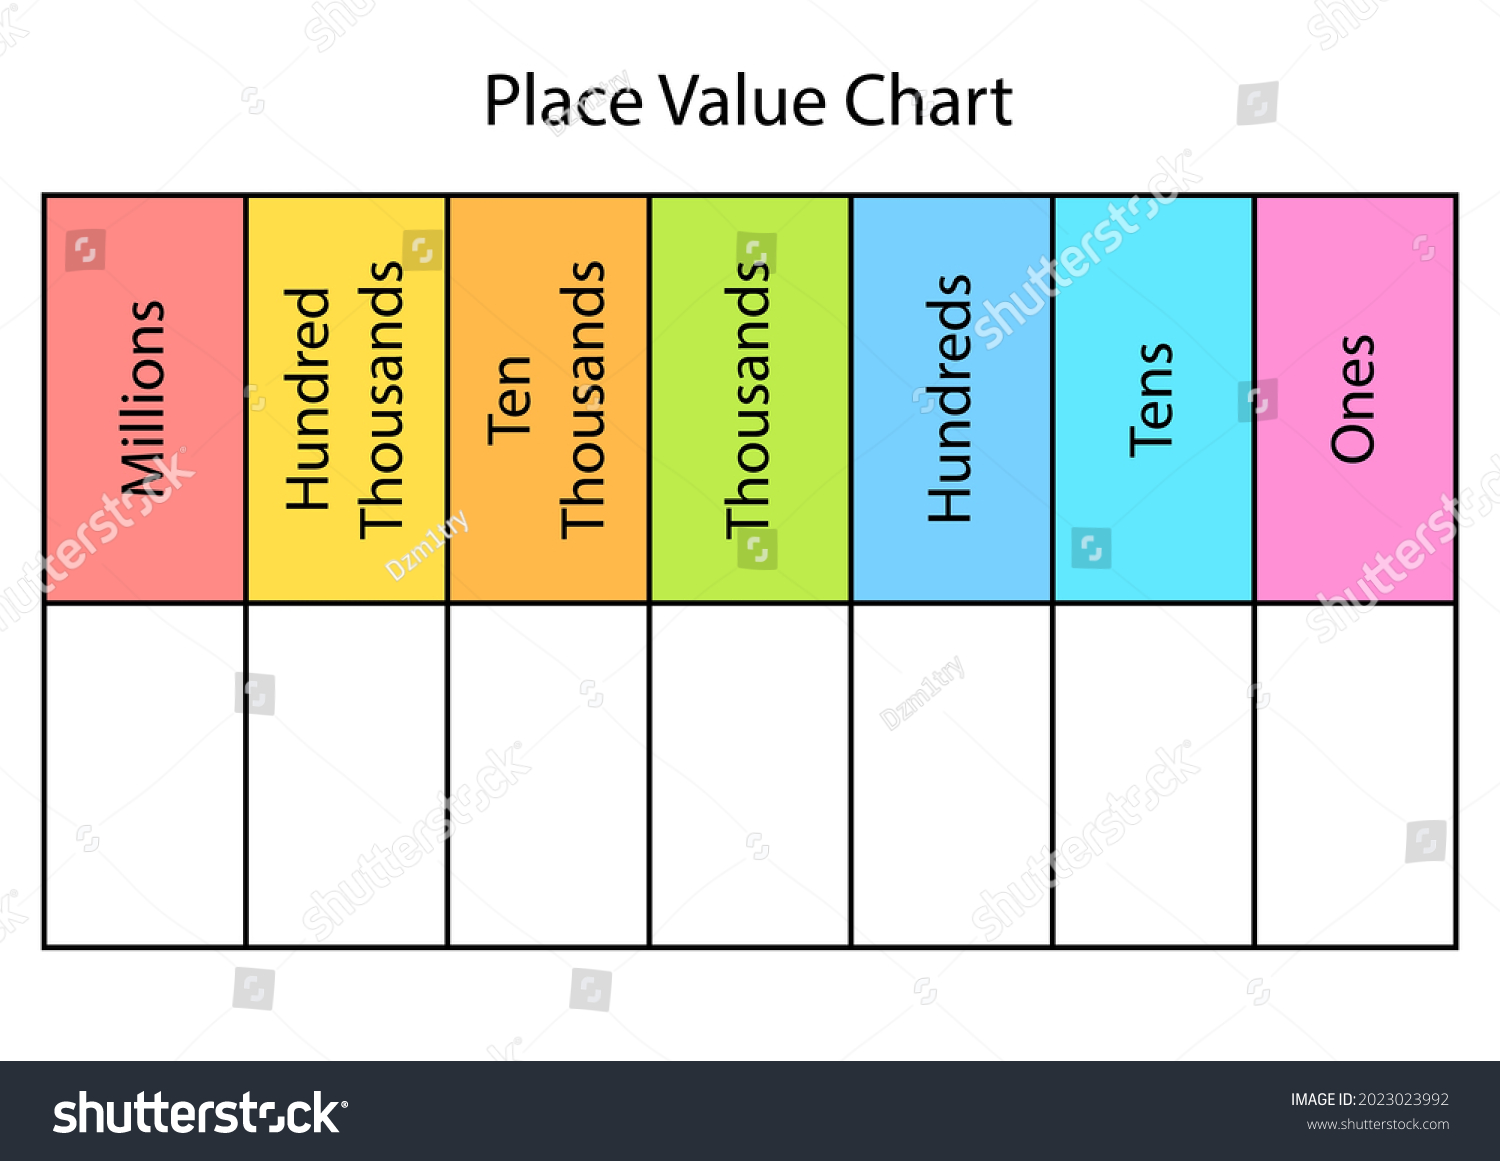 Place value